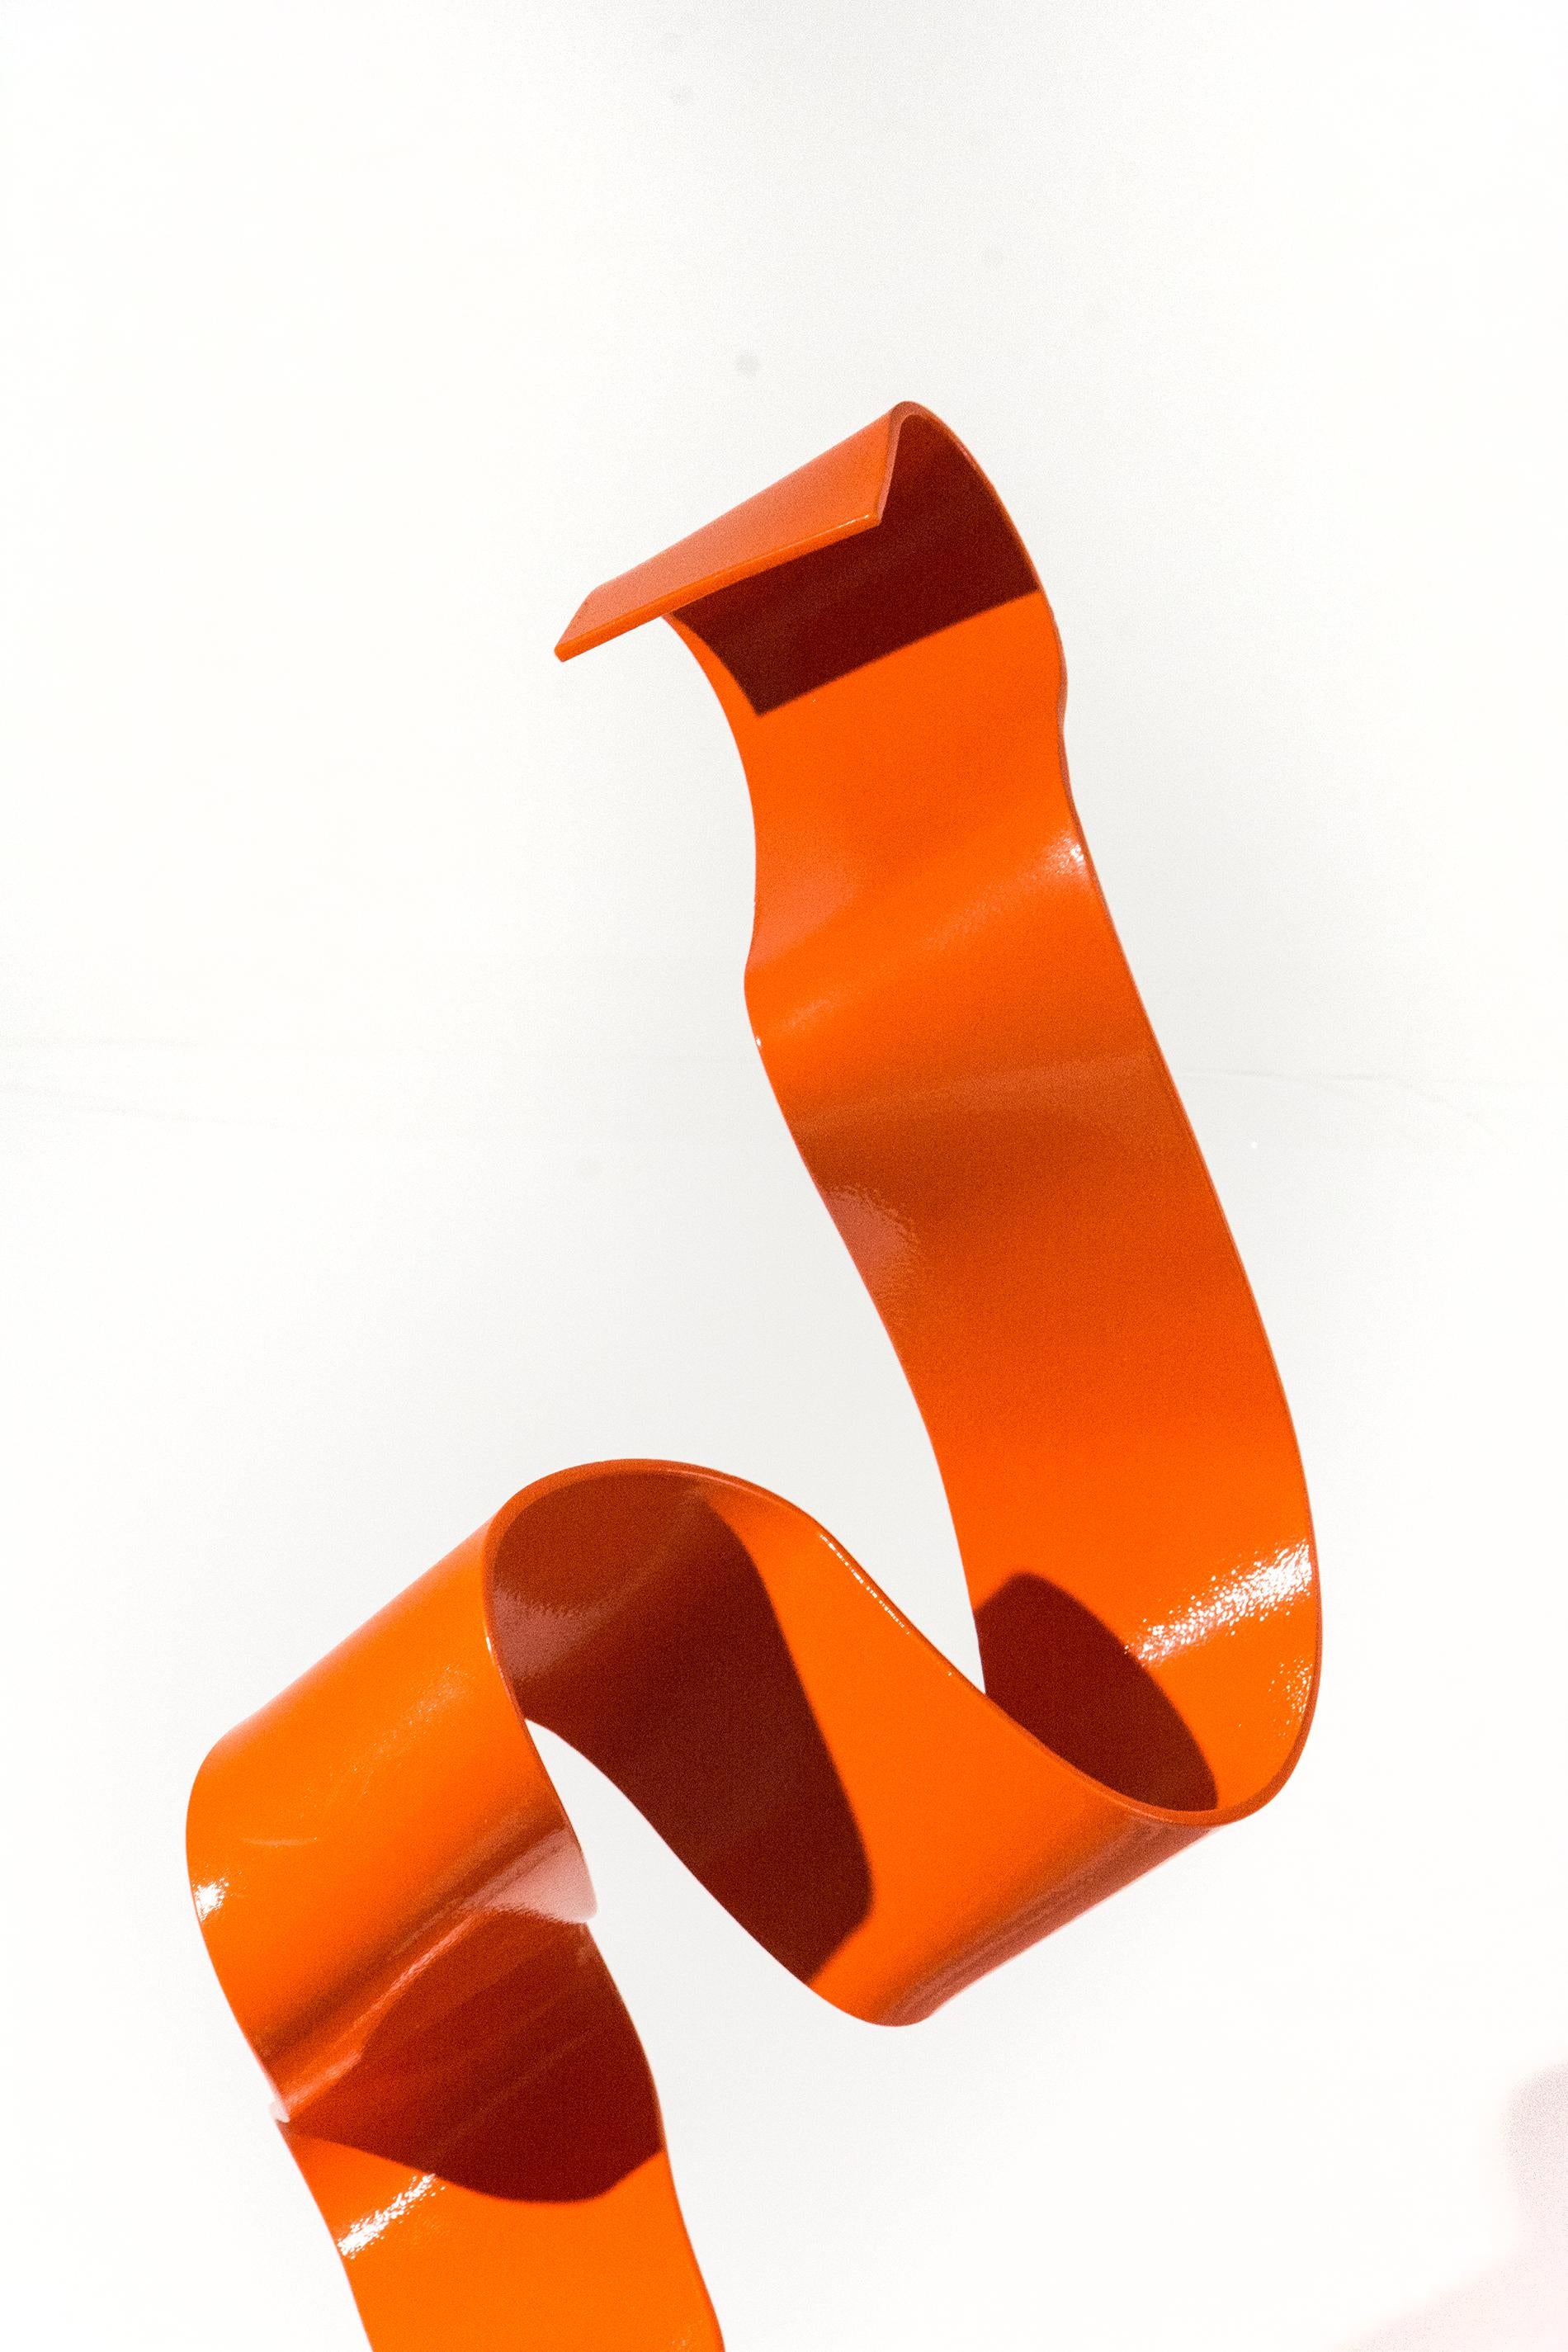 Unwound Orange II - Brown Abstract Sculpture by Mark Birksted